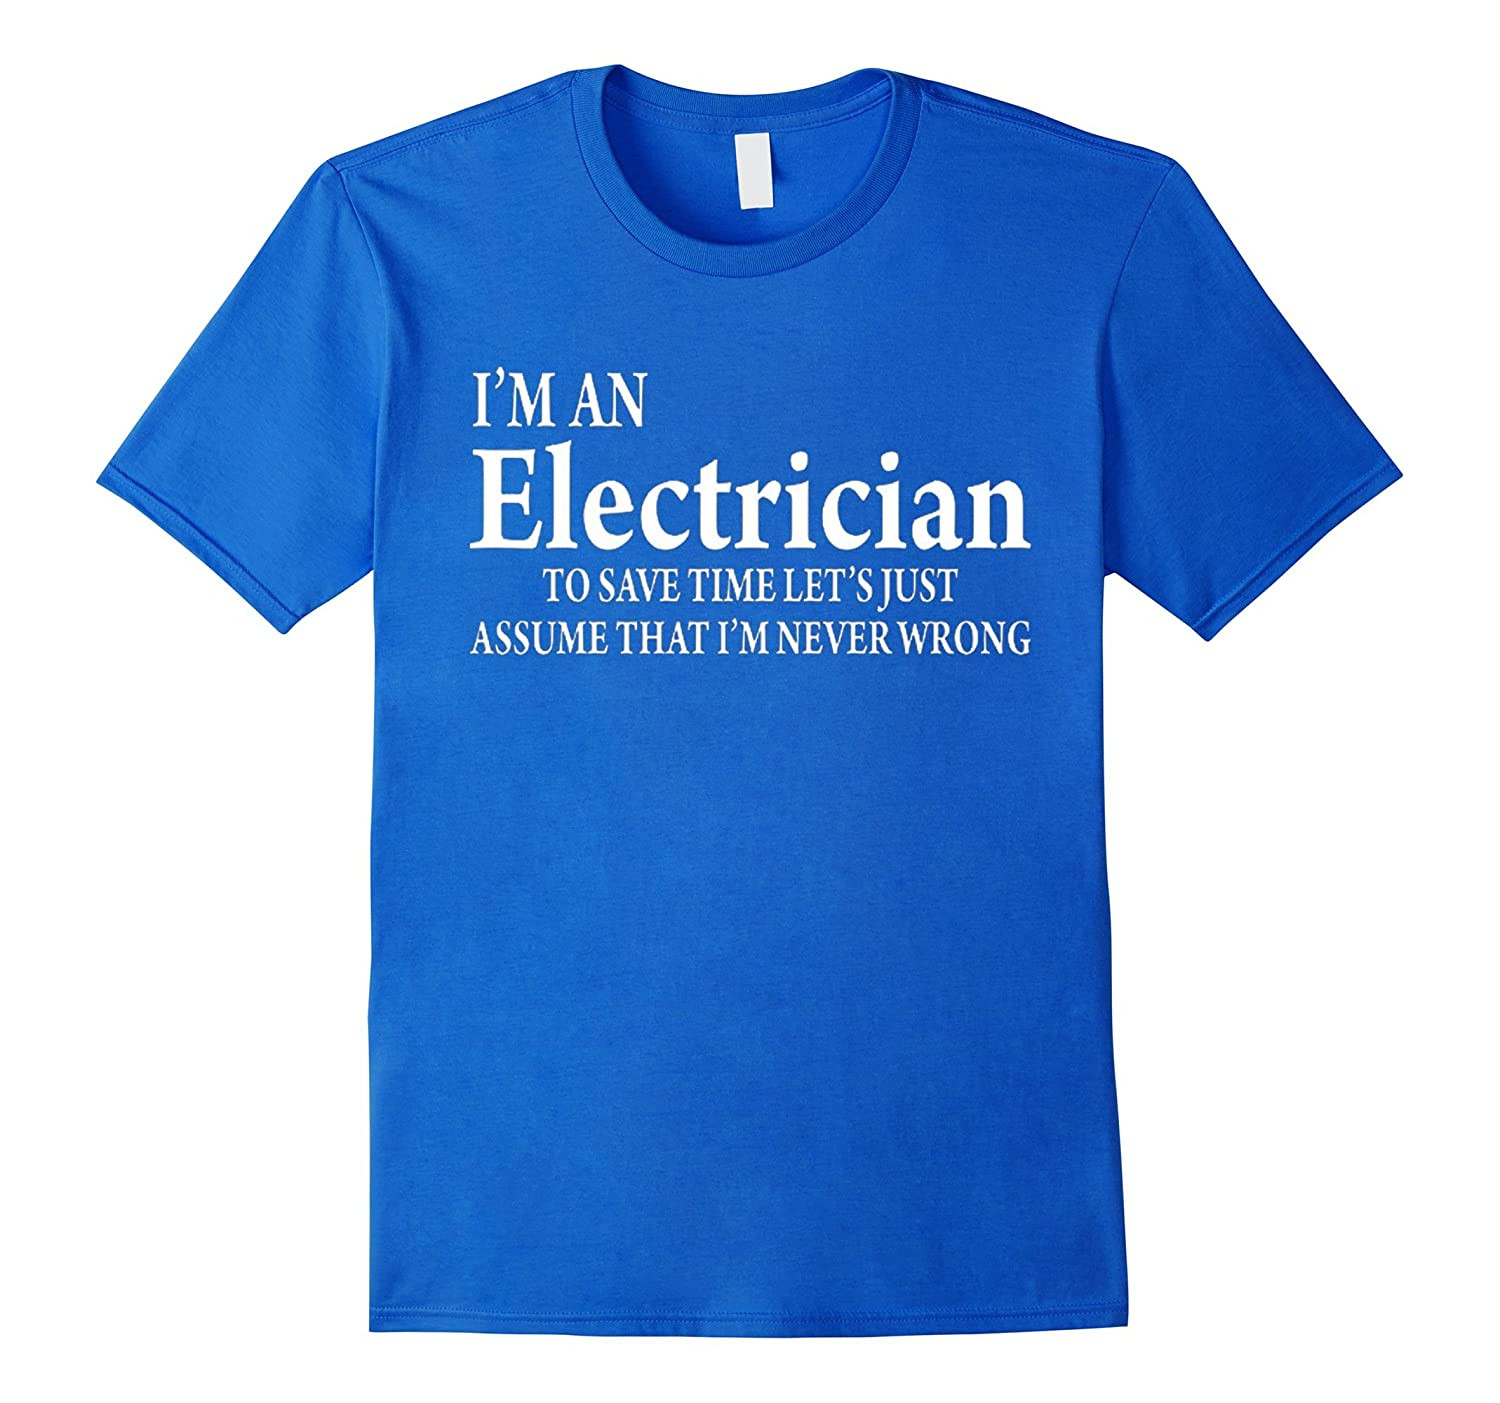 Funny Electrician Quotes
 Funny Electrician Quotes T Shirt Electrician Job Title